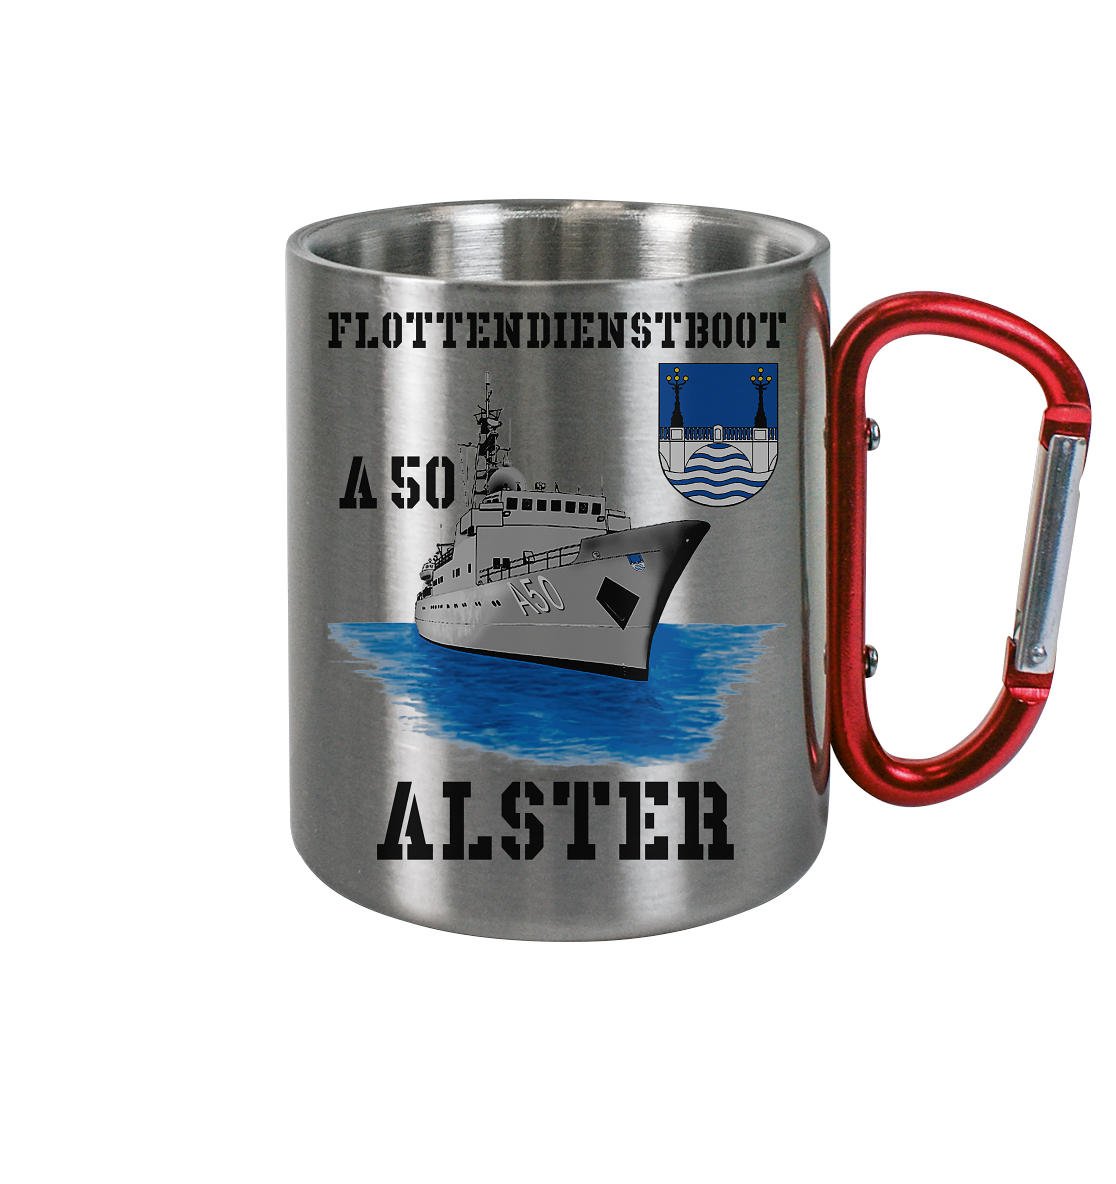 Flottendienstboot A50 Alster - Edelstahl Tasse